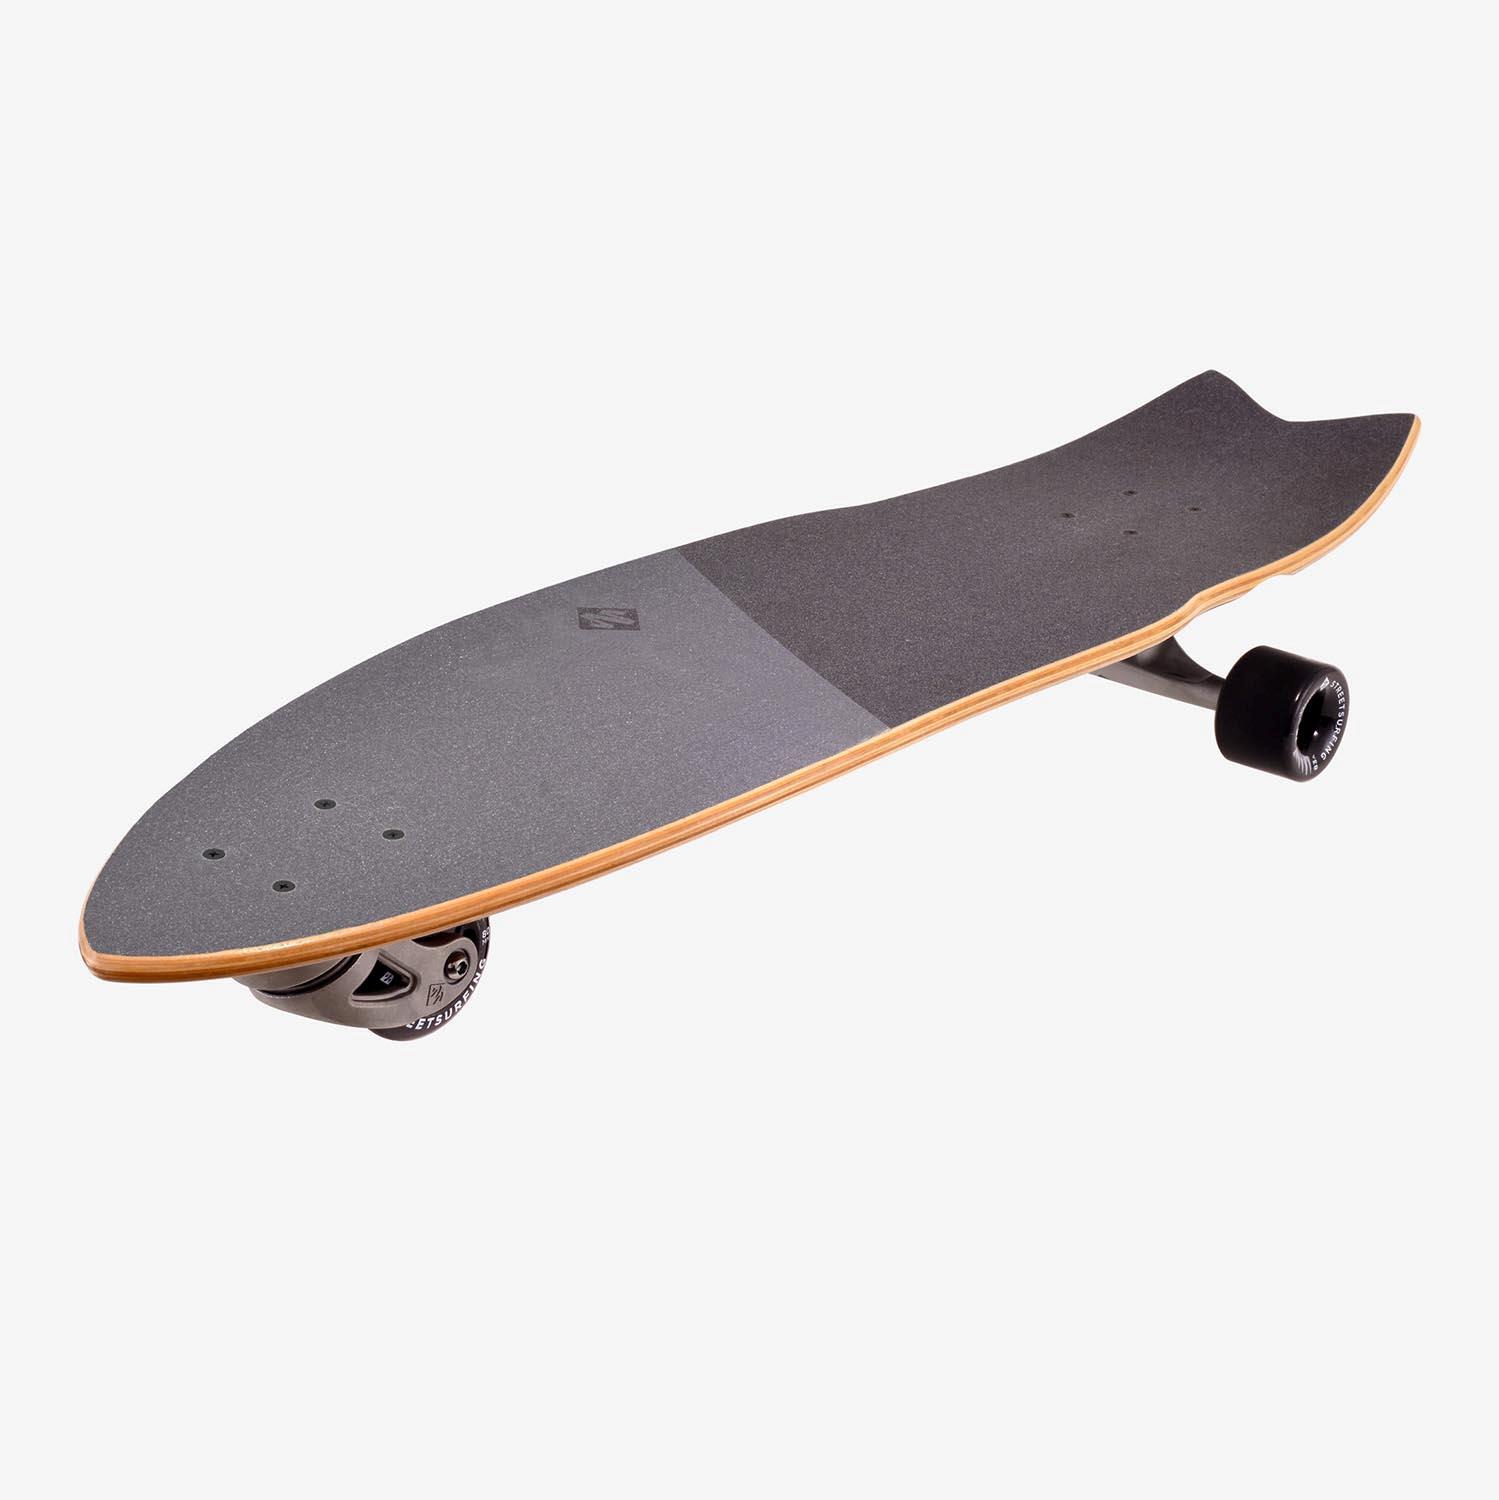 Tabla Skate StreetSurfing Koa Black 36 - Vert - Skateboard sports taille UNICA